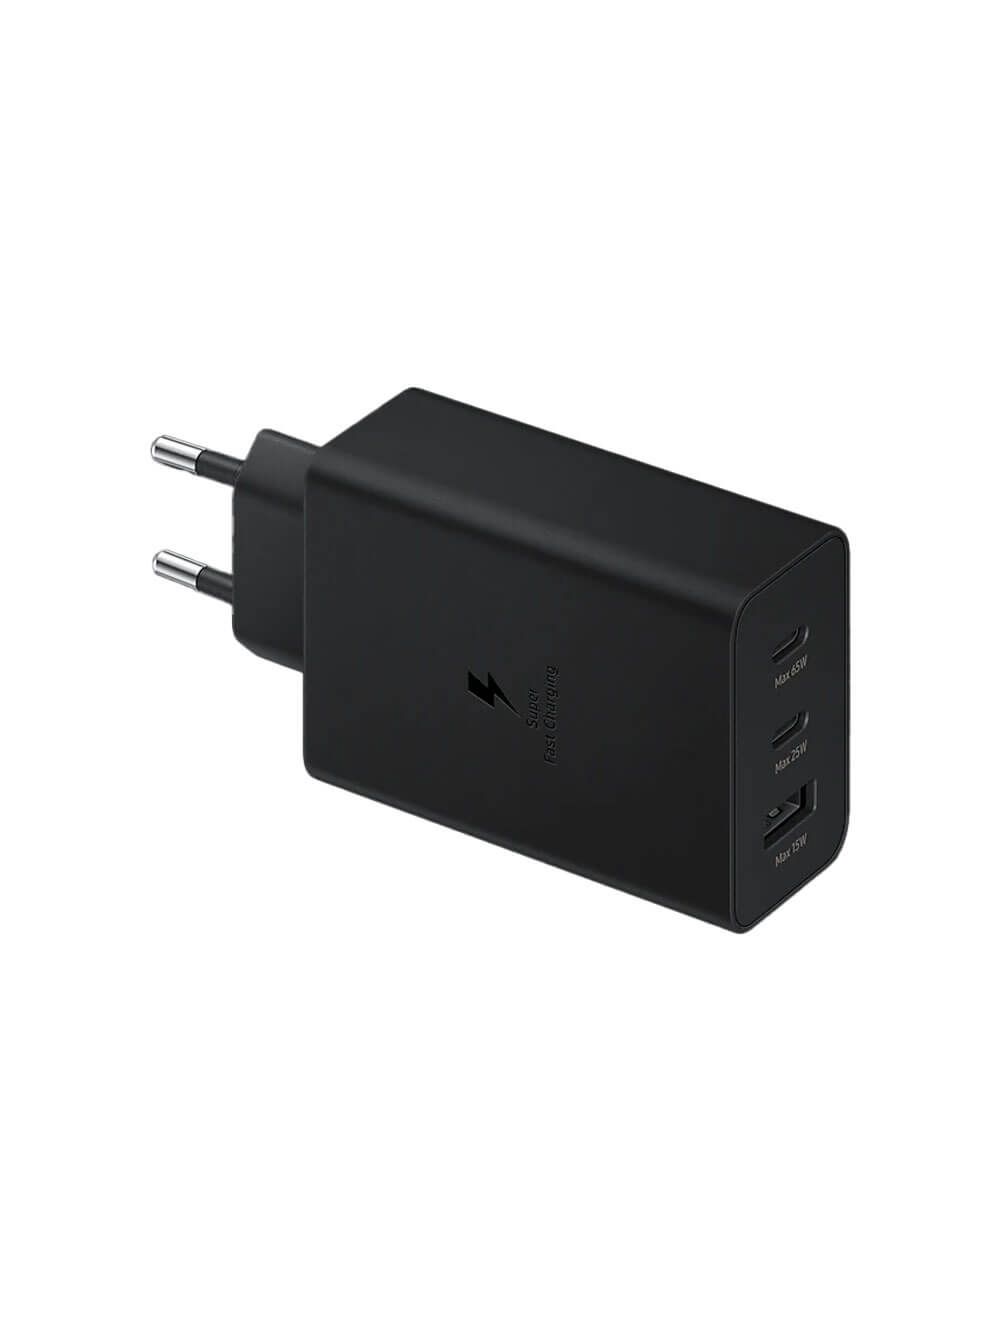 Chargeur USB C 25W Power Delivery, chargeur Quick USB C 4.0 avec